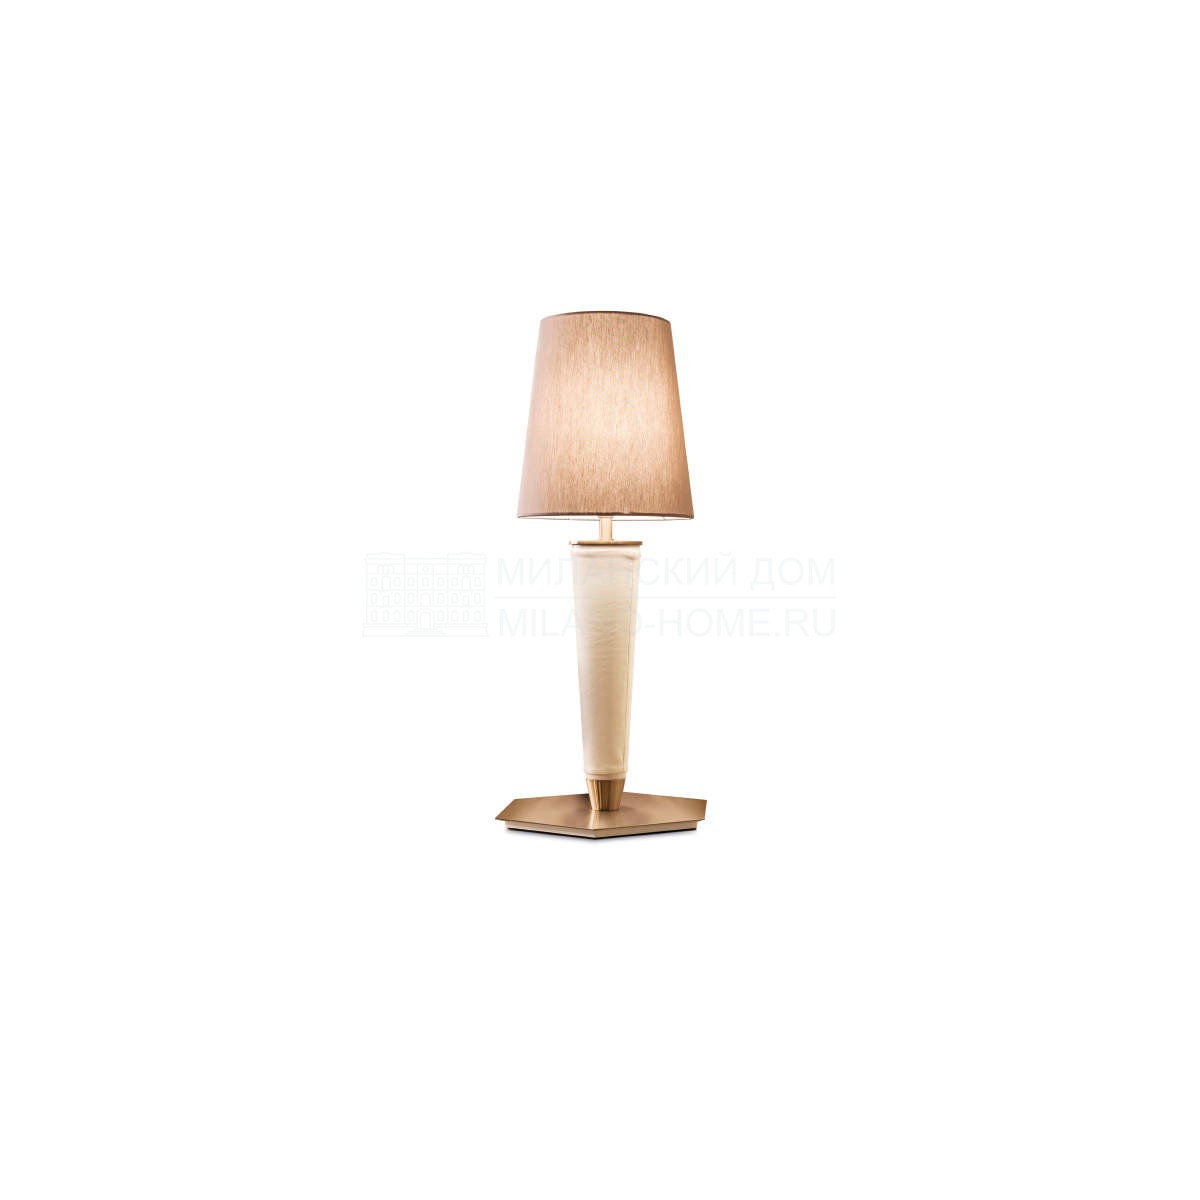 Настольная лампа Noir table lamp из Италии фабрики TURRI